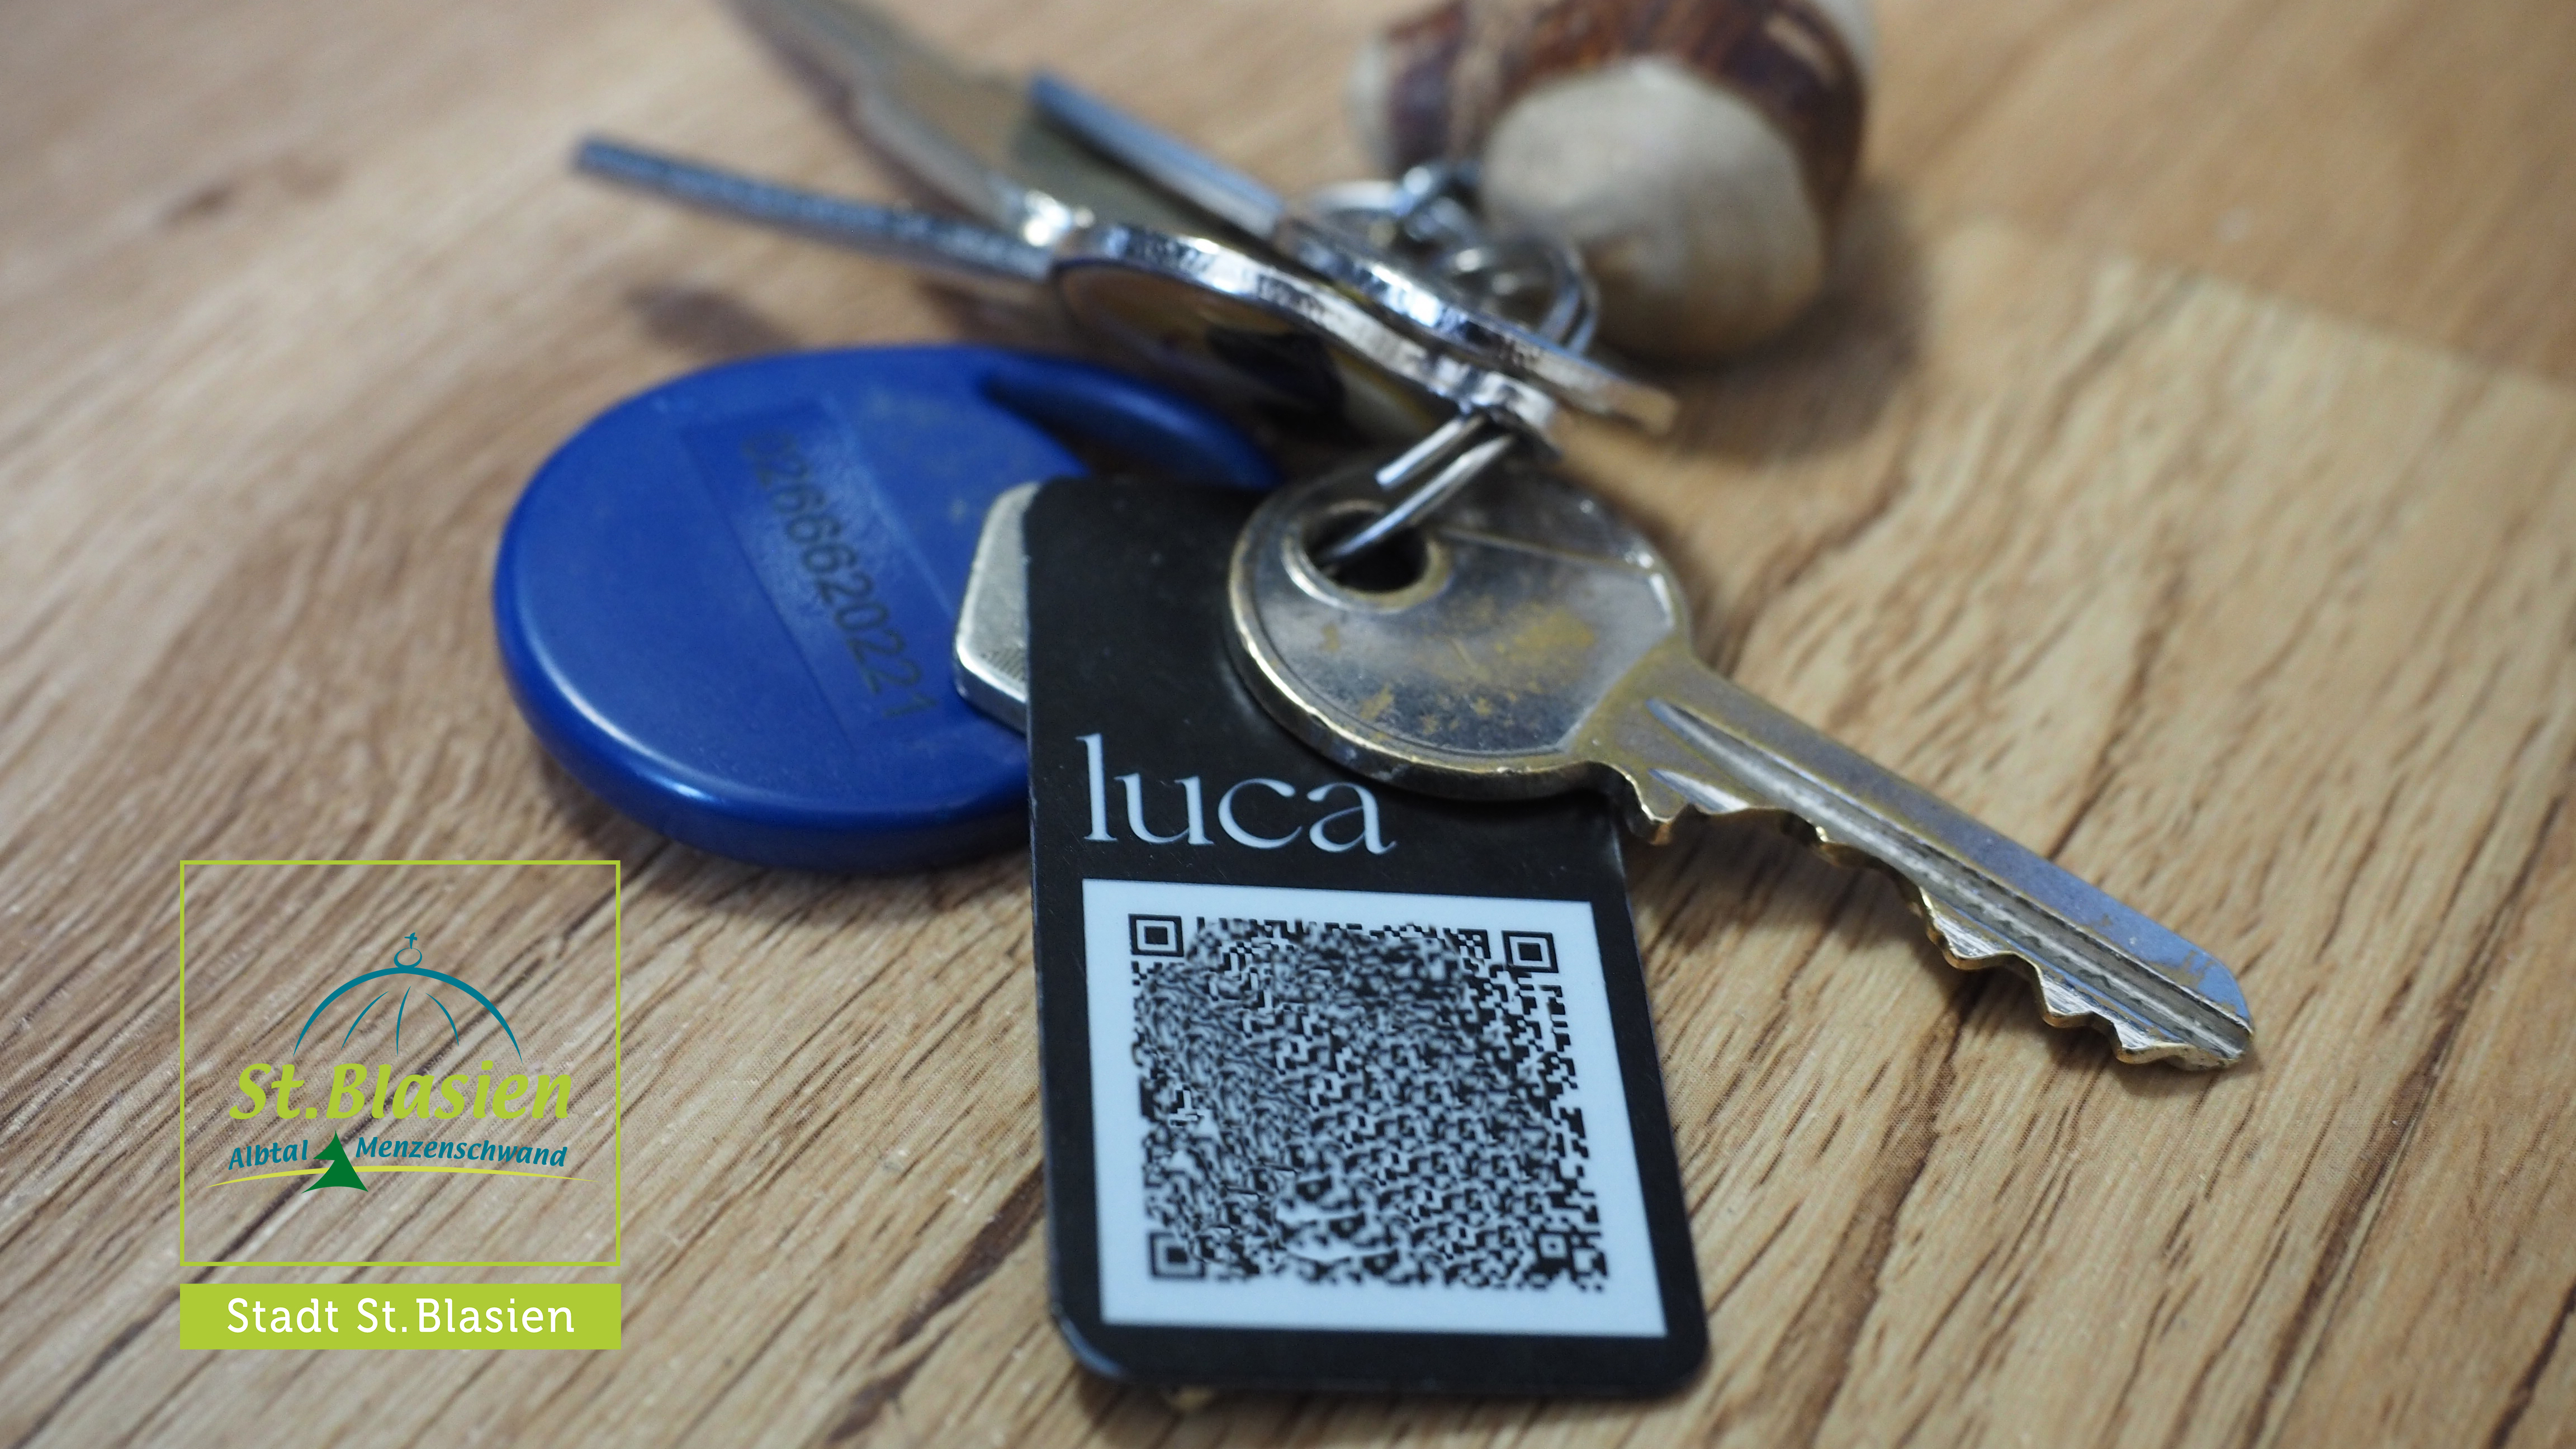  Statt Smartphone: Luca-Schlüsselanhänger 